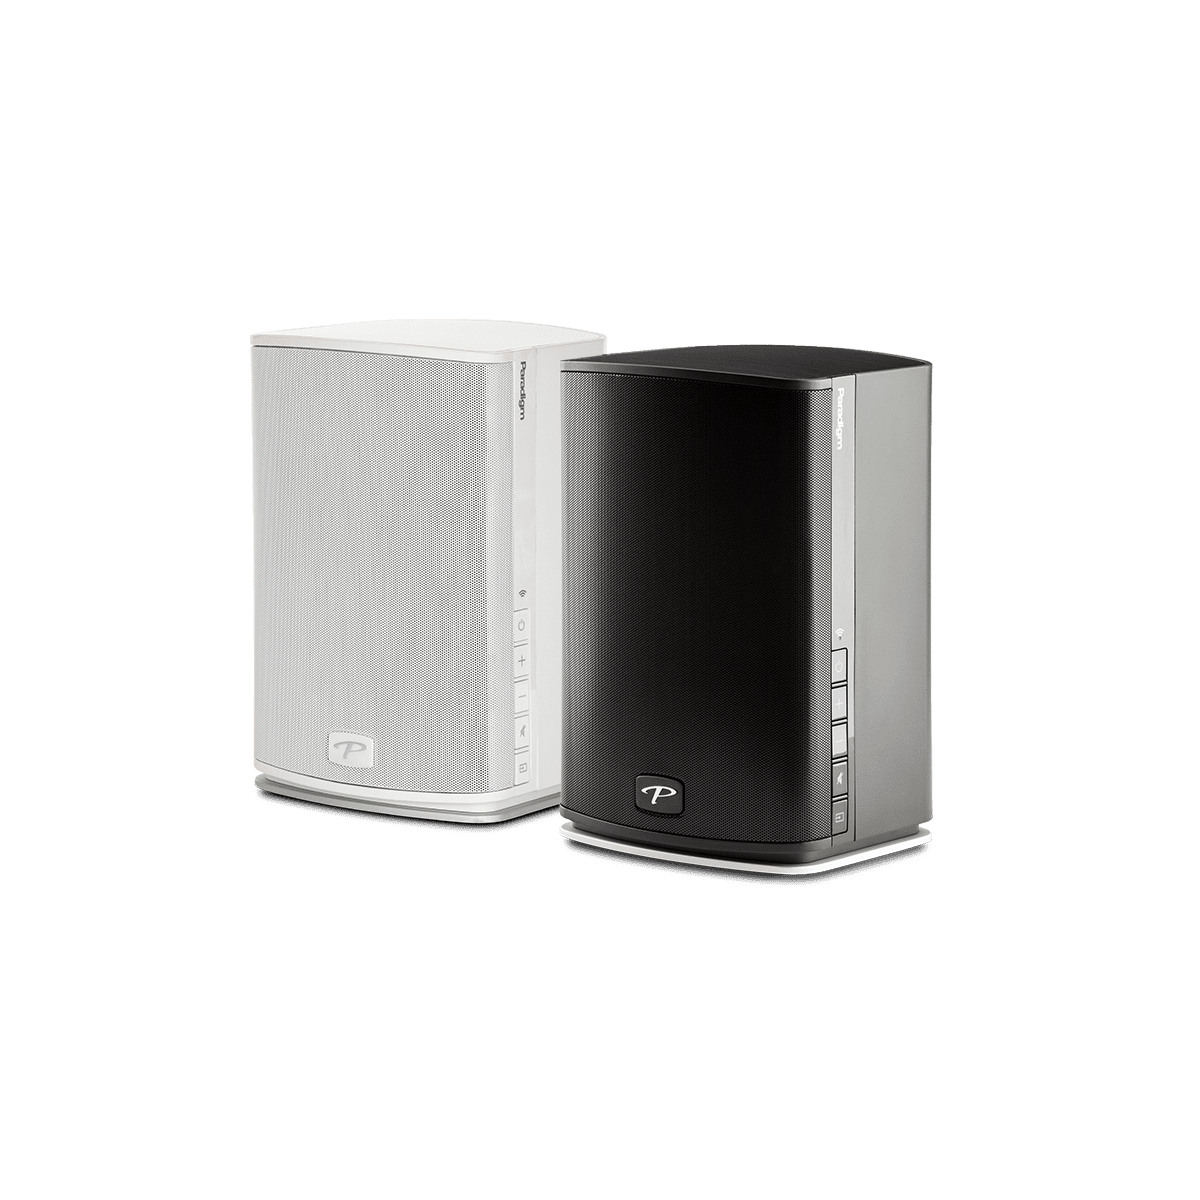 Paradigm Wireless Speakers - 75% off